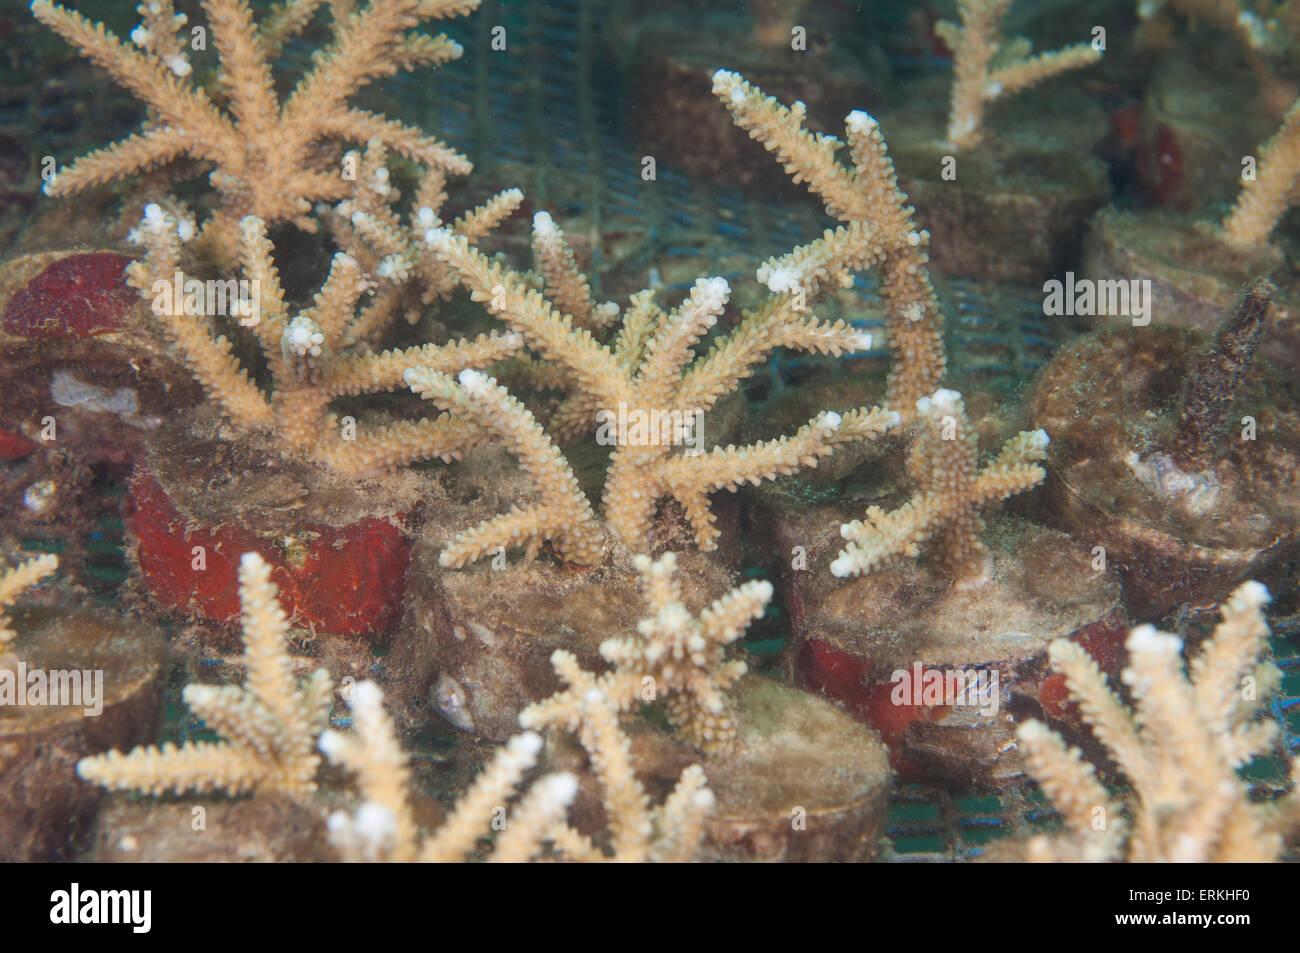 Several planted staghorn corals grouped together, Tunku Abdul Rahman Park, Kota Kinabalu, Sabah, Malaysia Stock Photo